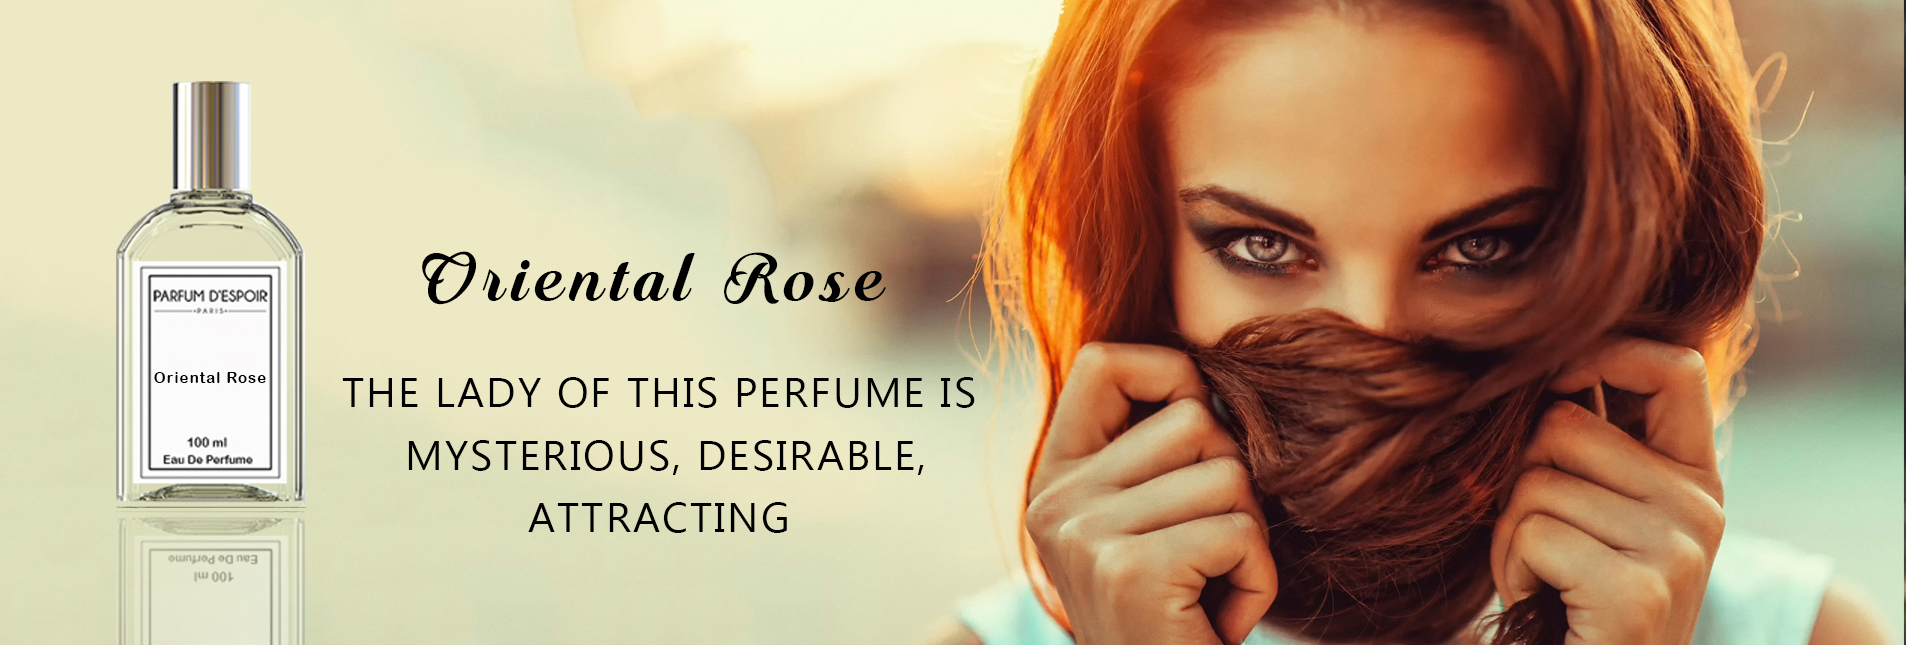 Oriental Rose - oriental woody perfume - original perfume - Parfum D'espoir